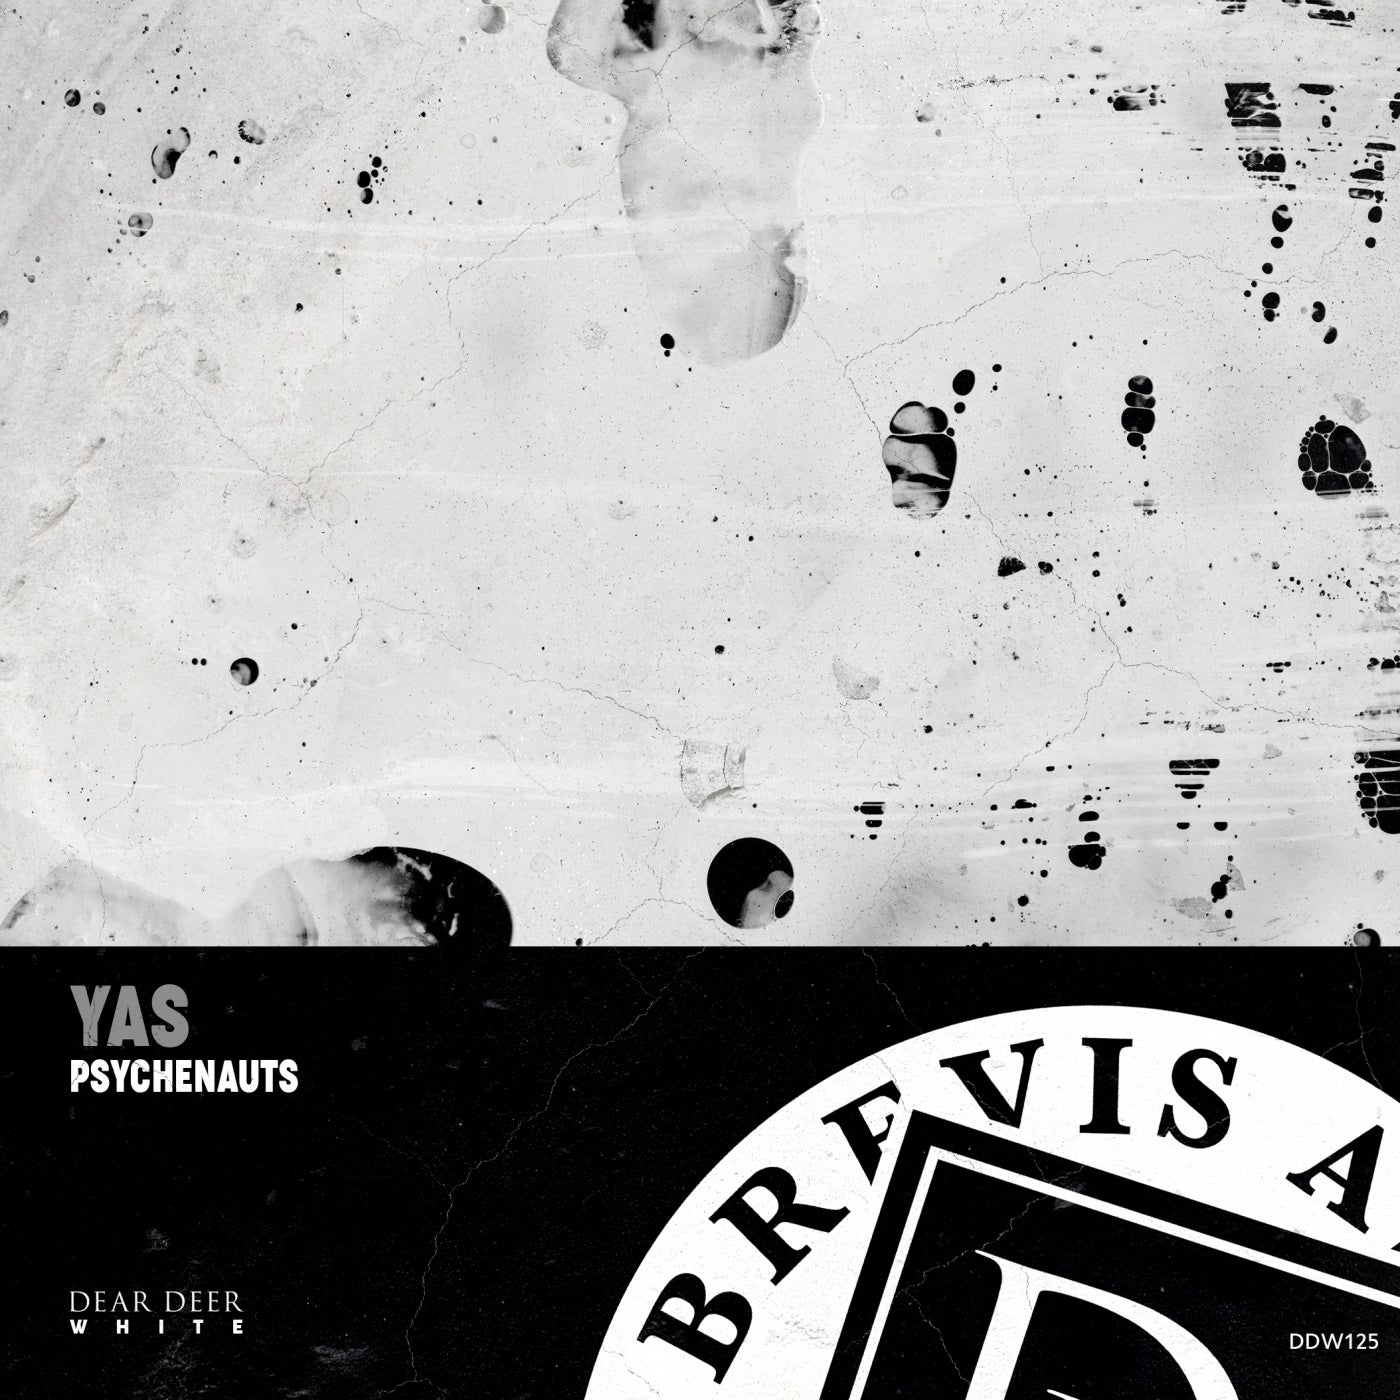 Yas – Psychenauts LP [DDW125]